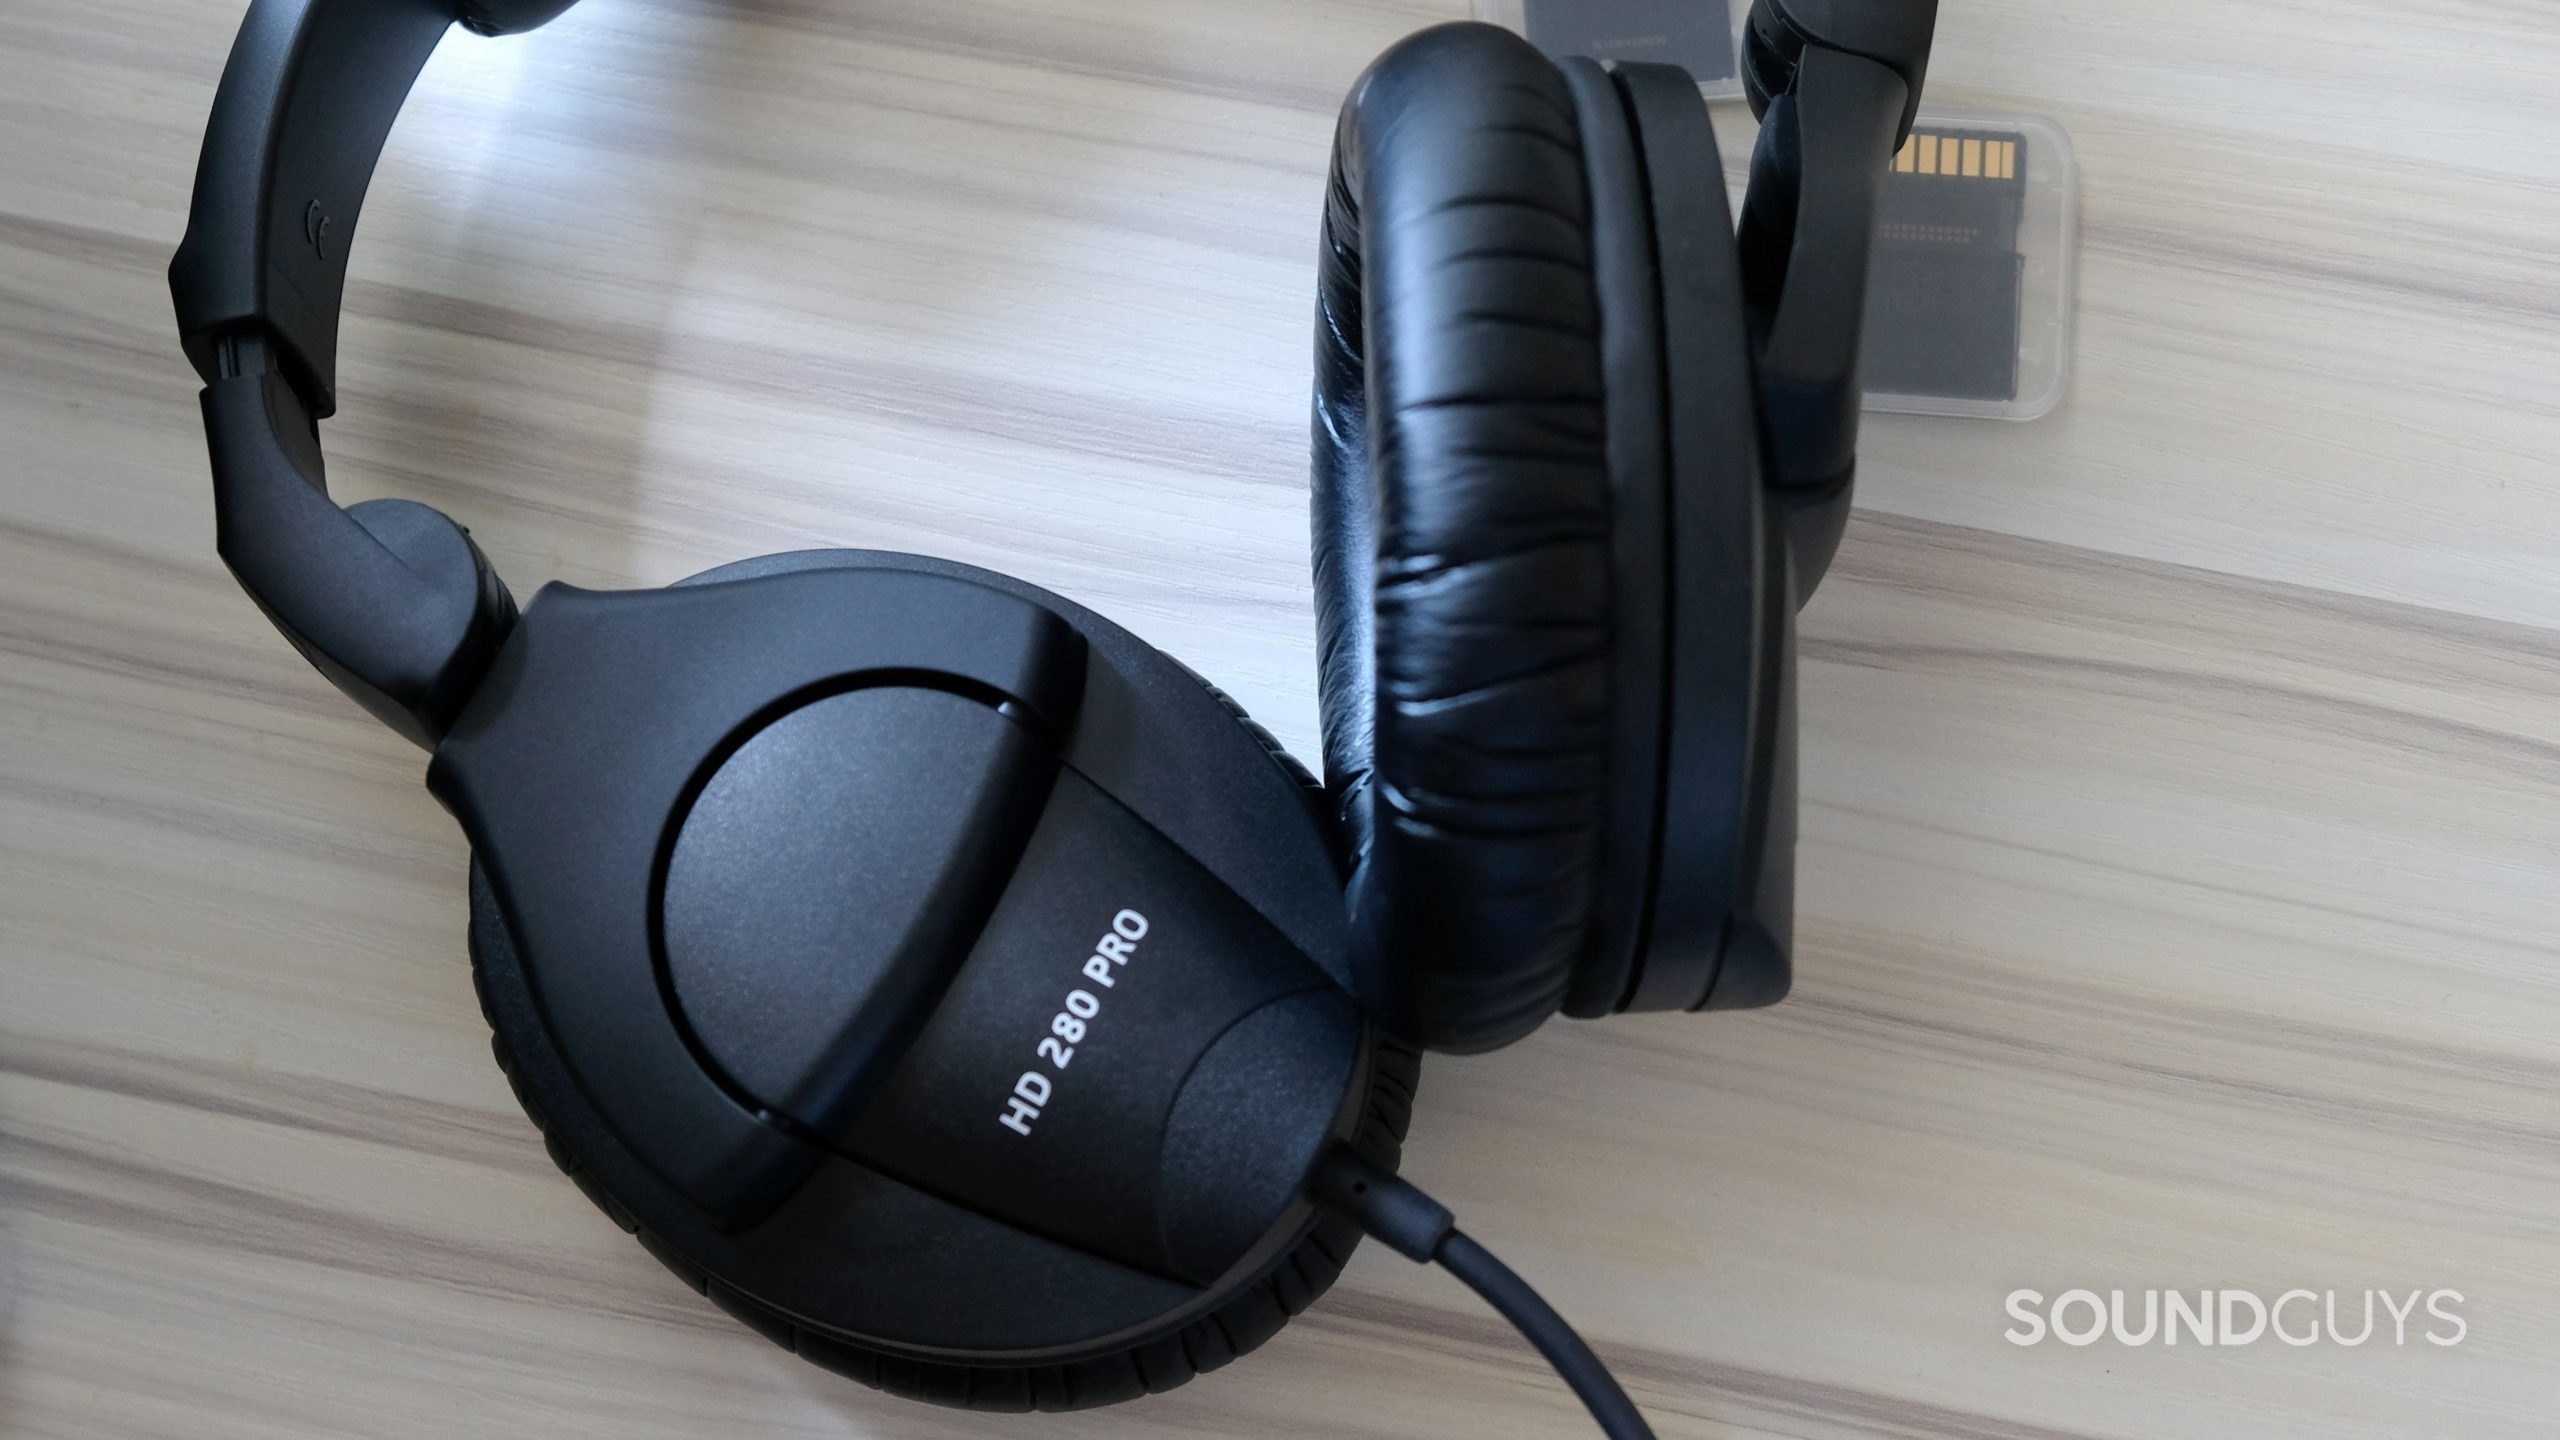 Sennheiser - HD 280 Pro Closed-back Headphones